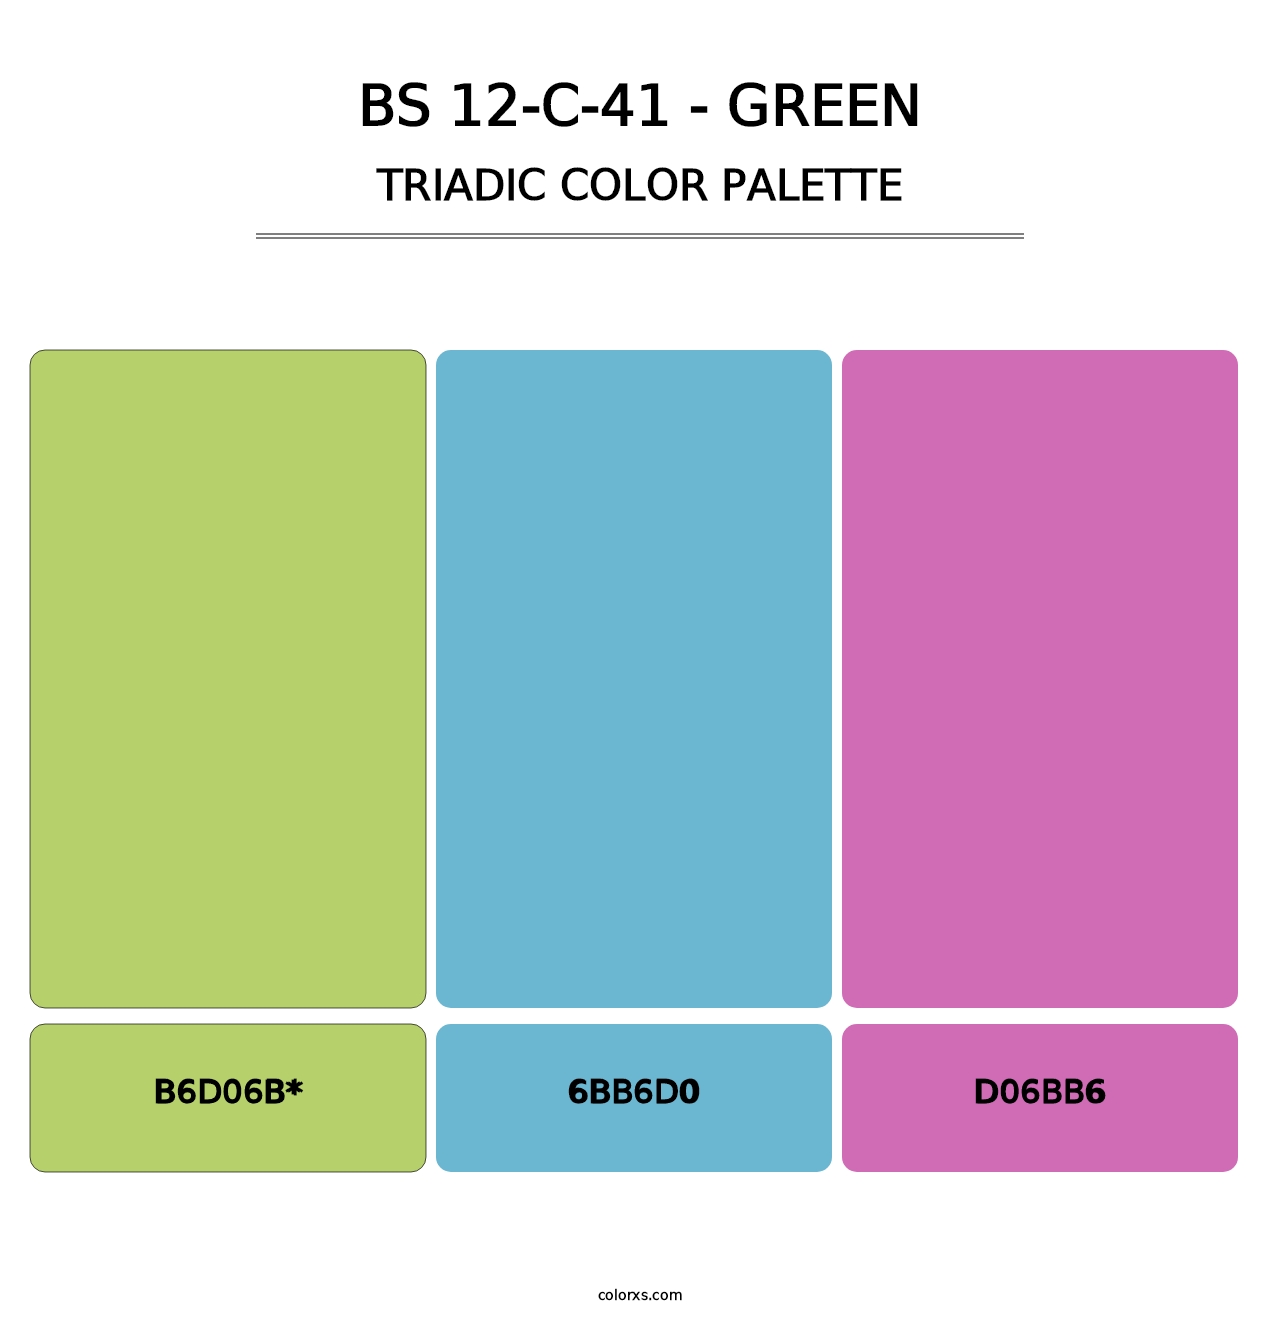 BS 12-C-41 - Green - Triadic Color Palette